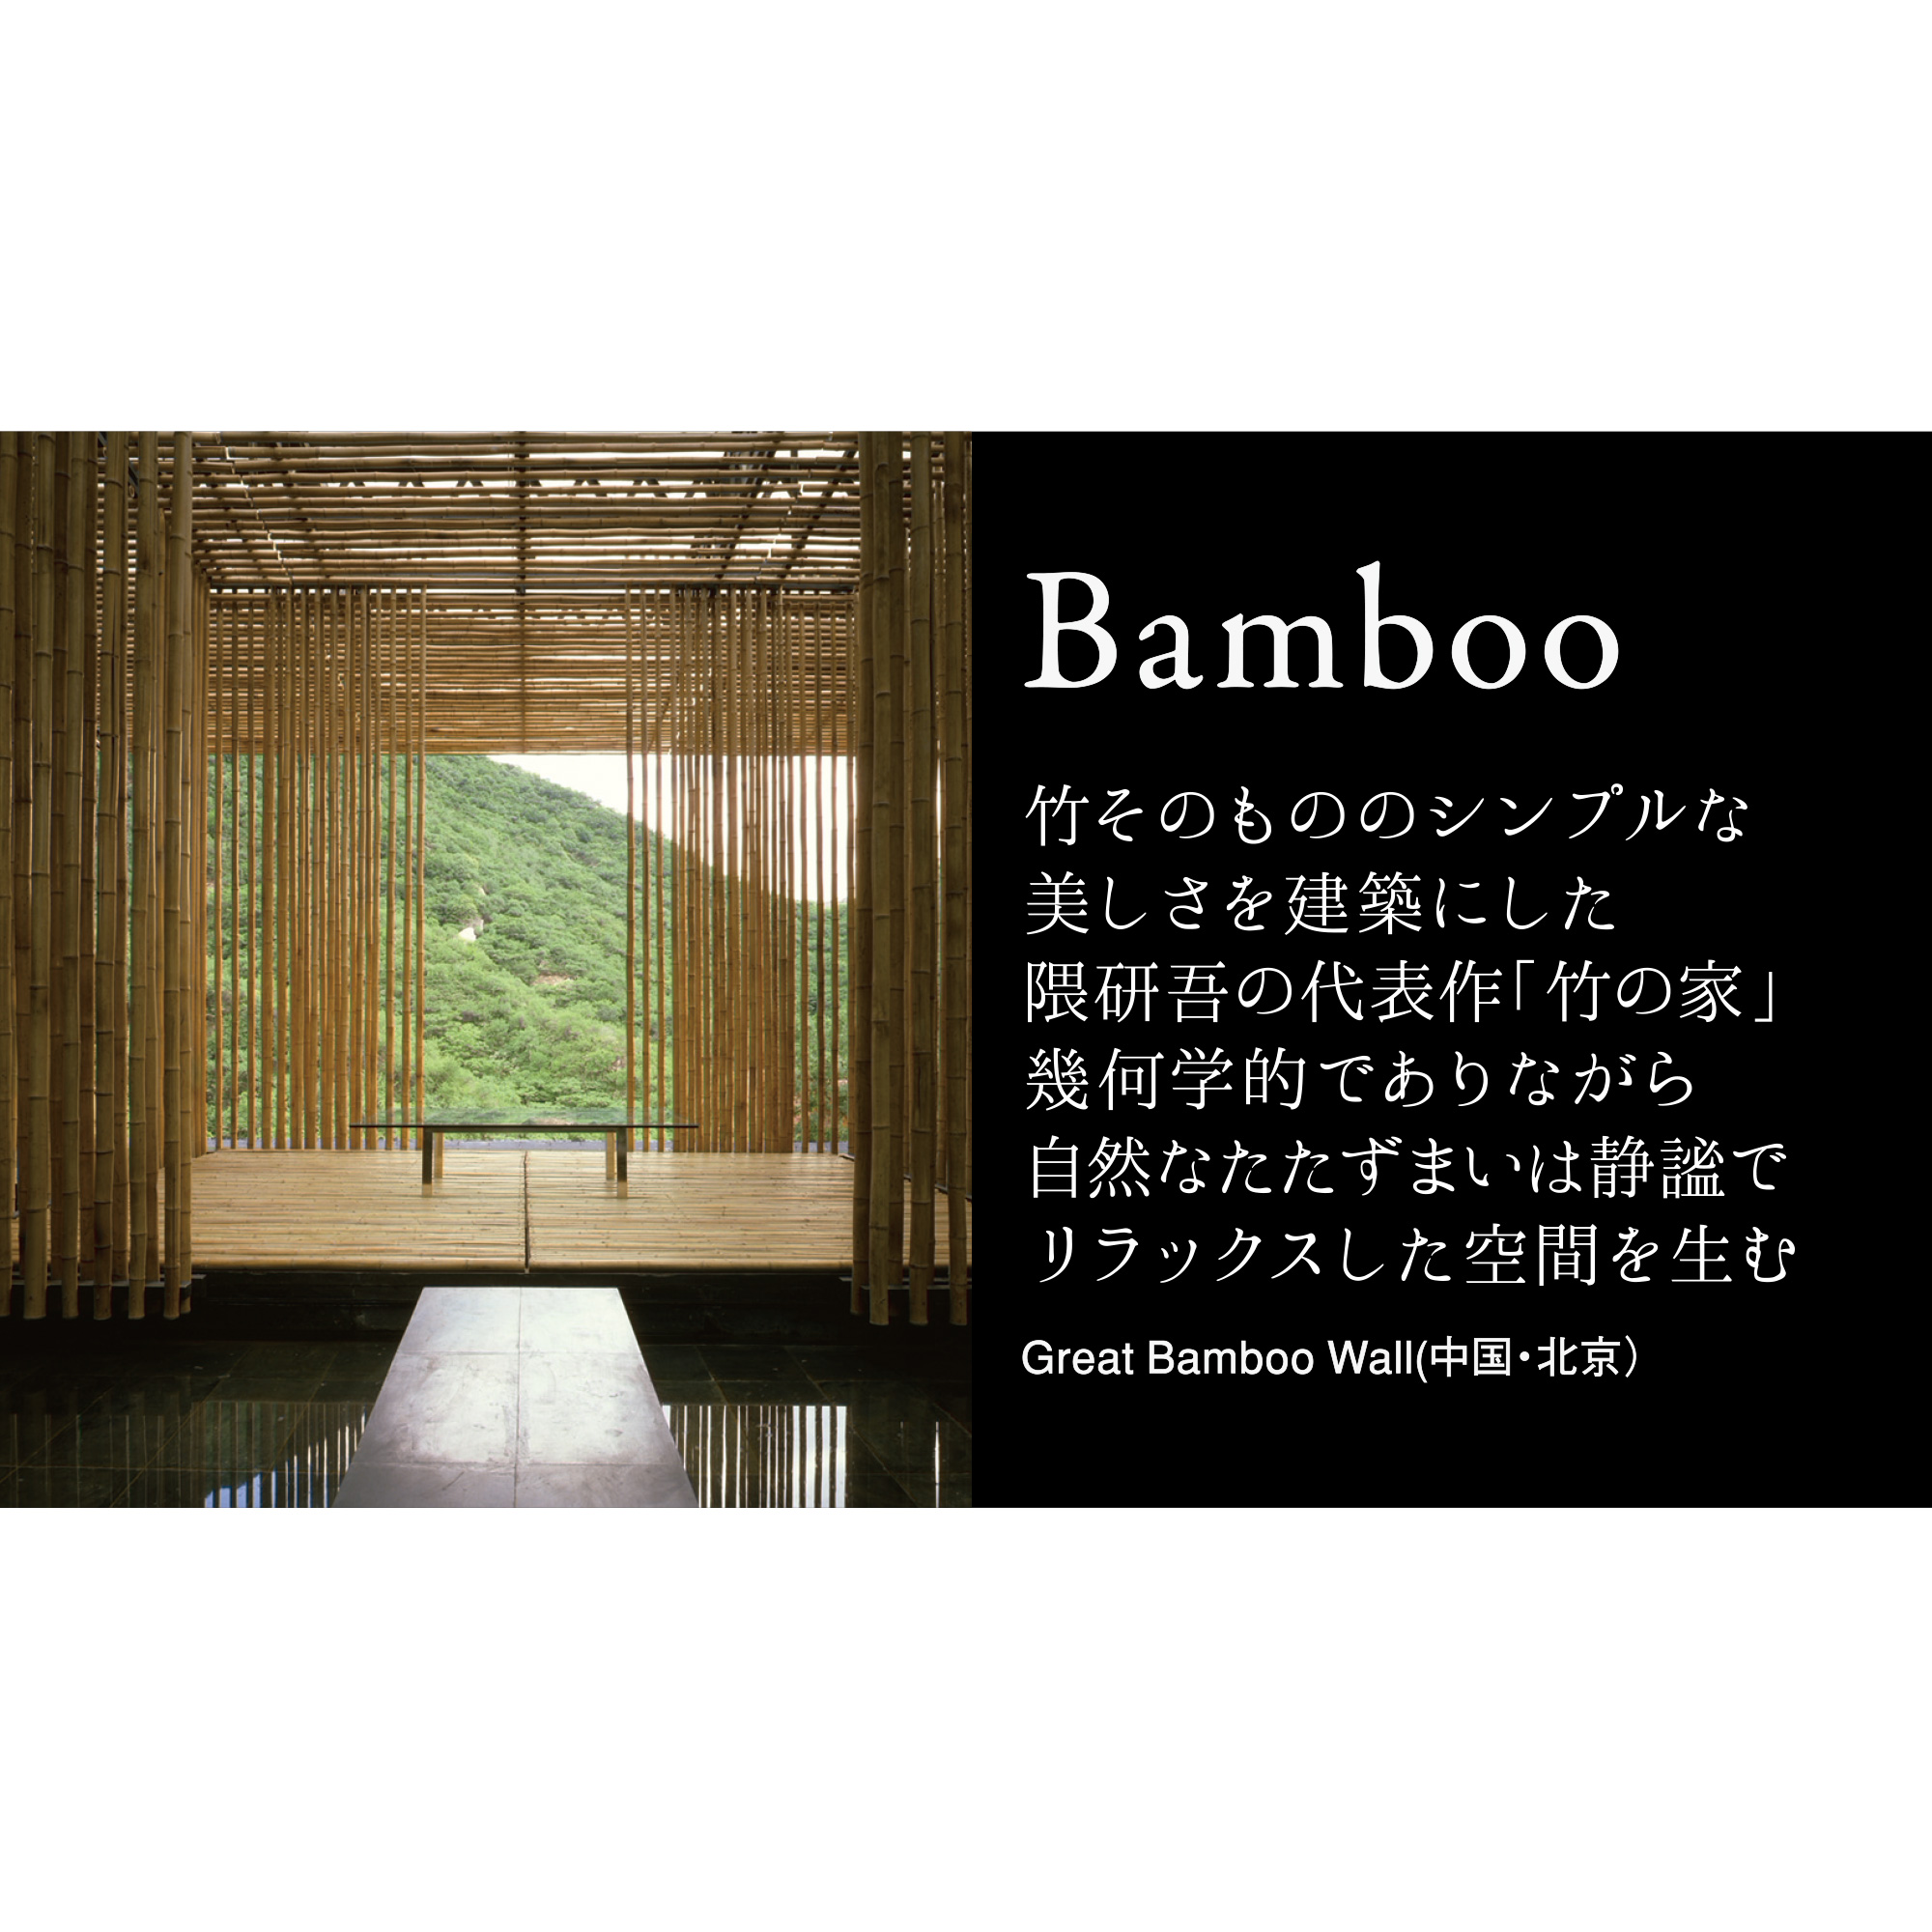 Bamboo タイバー, -, -